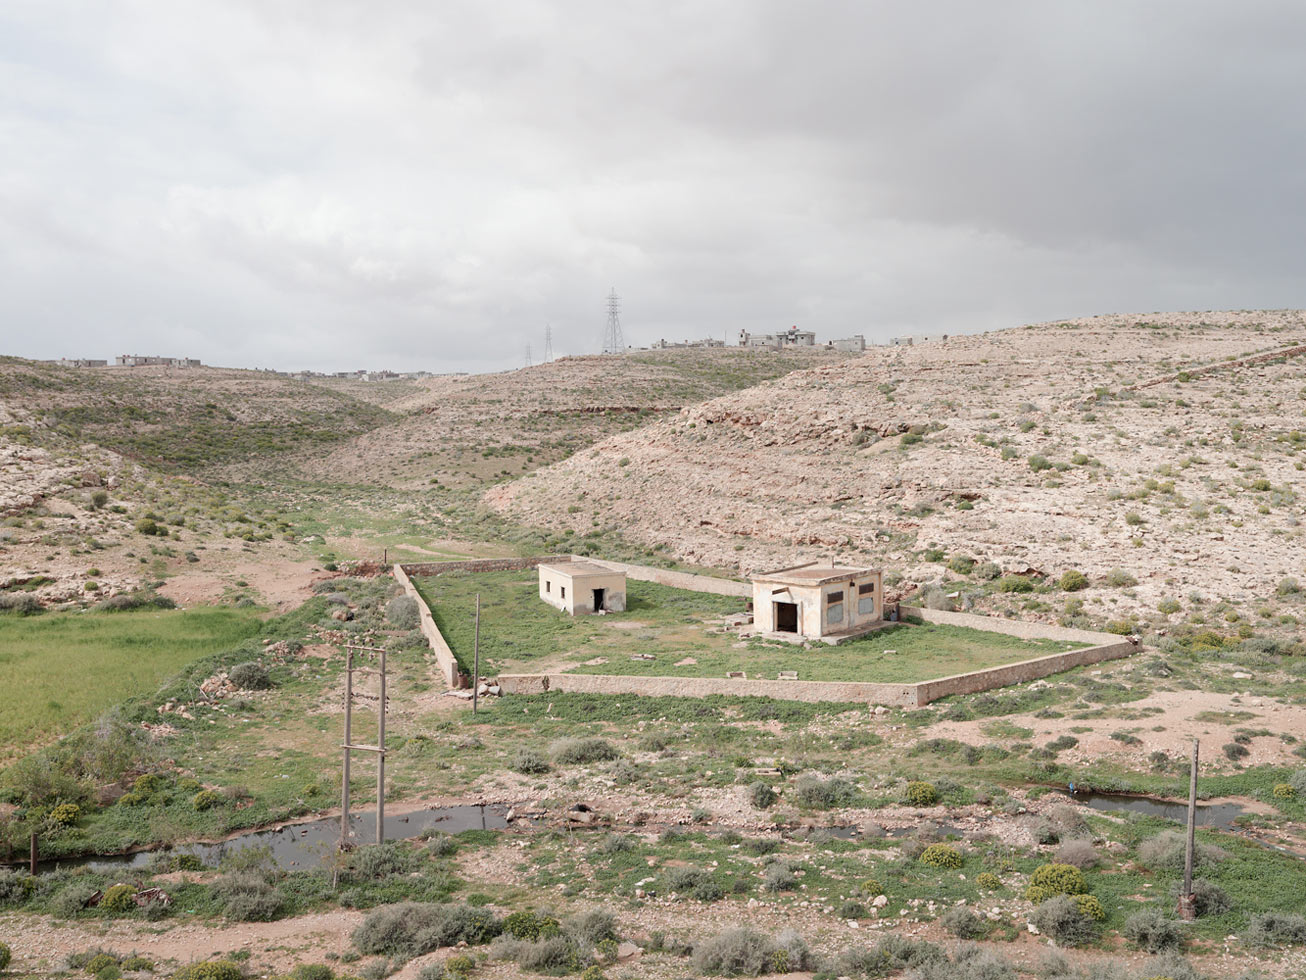 Wadi Auda water pumping station. 
Fort Auda, Libya